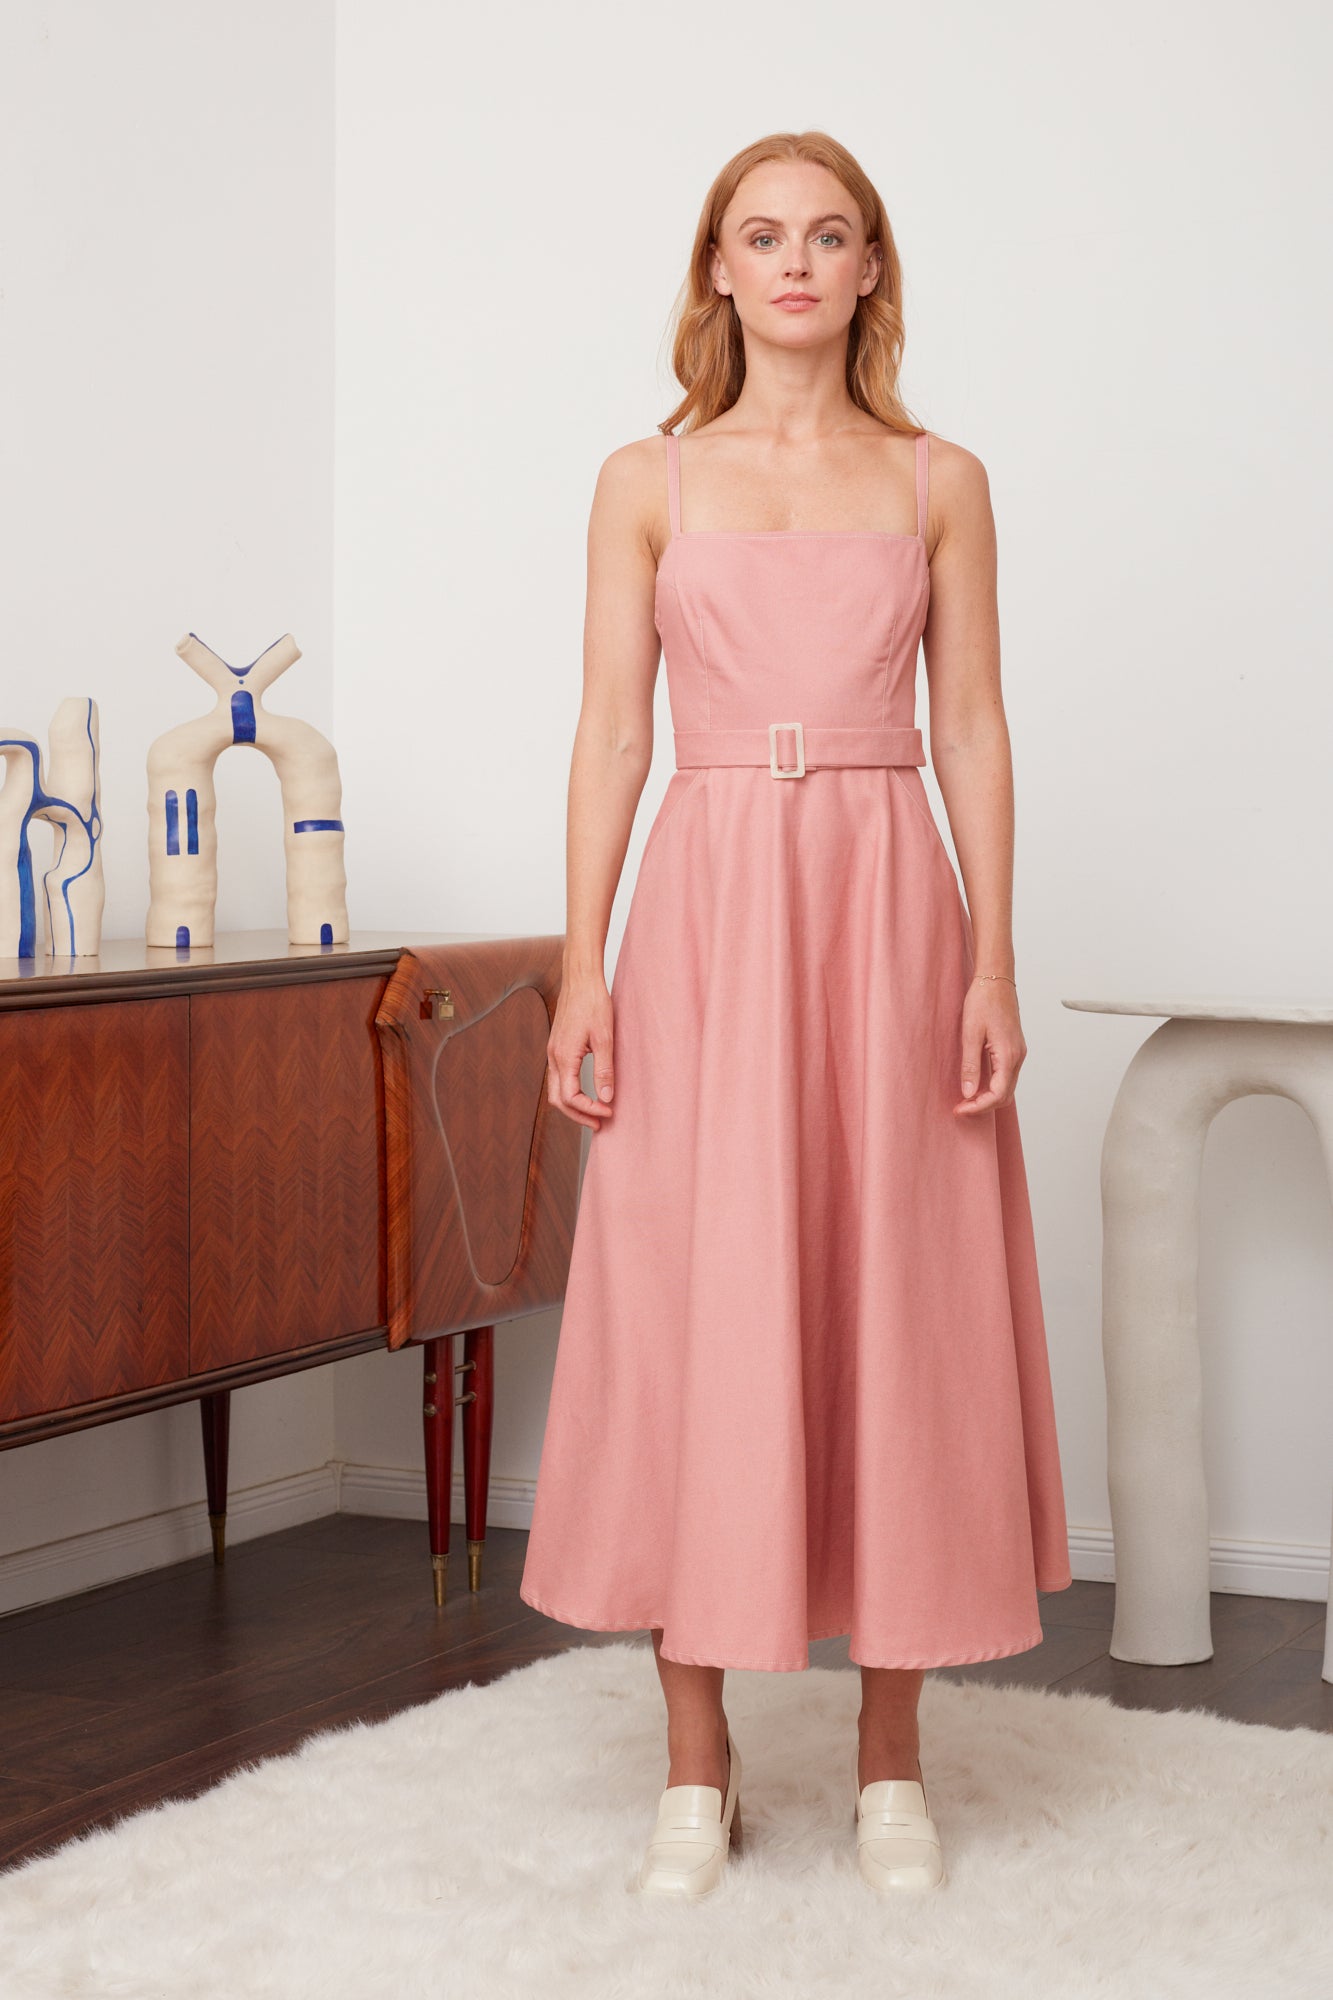 MATISSA Pastel Pink Denim Midi Dress - Sophisticated Midi Length